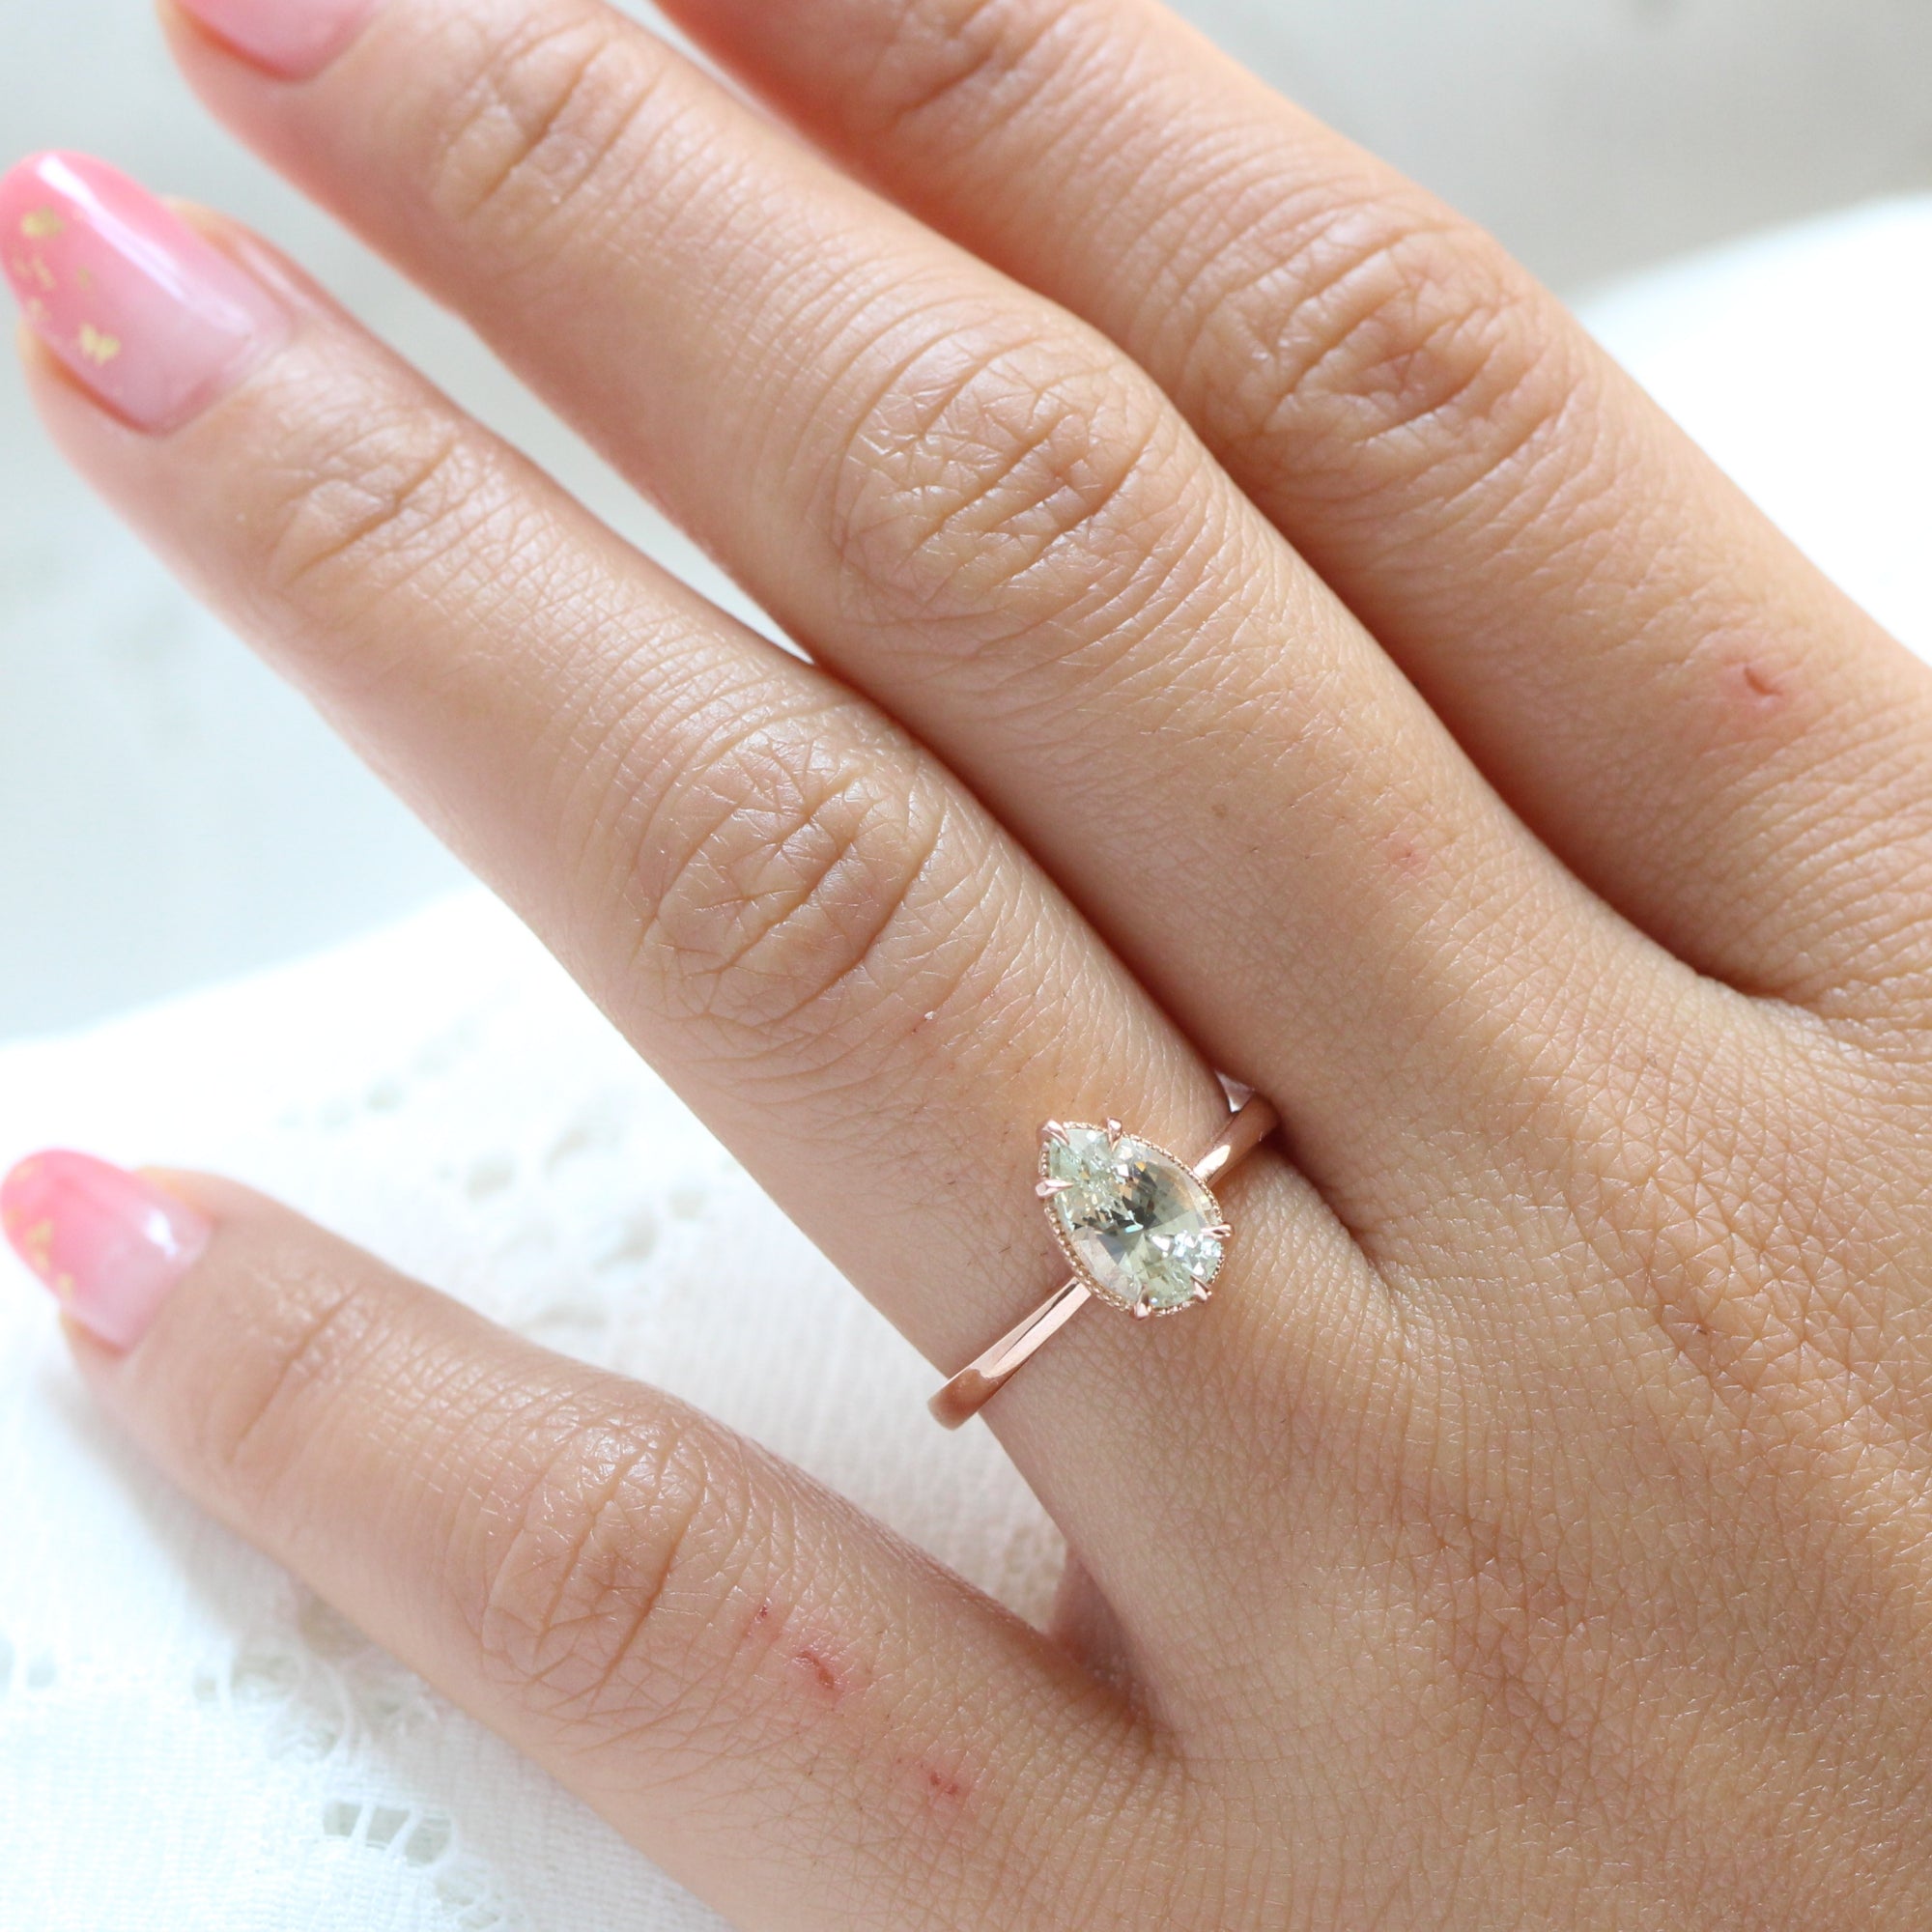 pear sea foam green sapphire ring rose gold solitaire ring la more design jewelry